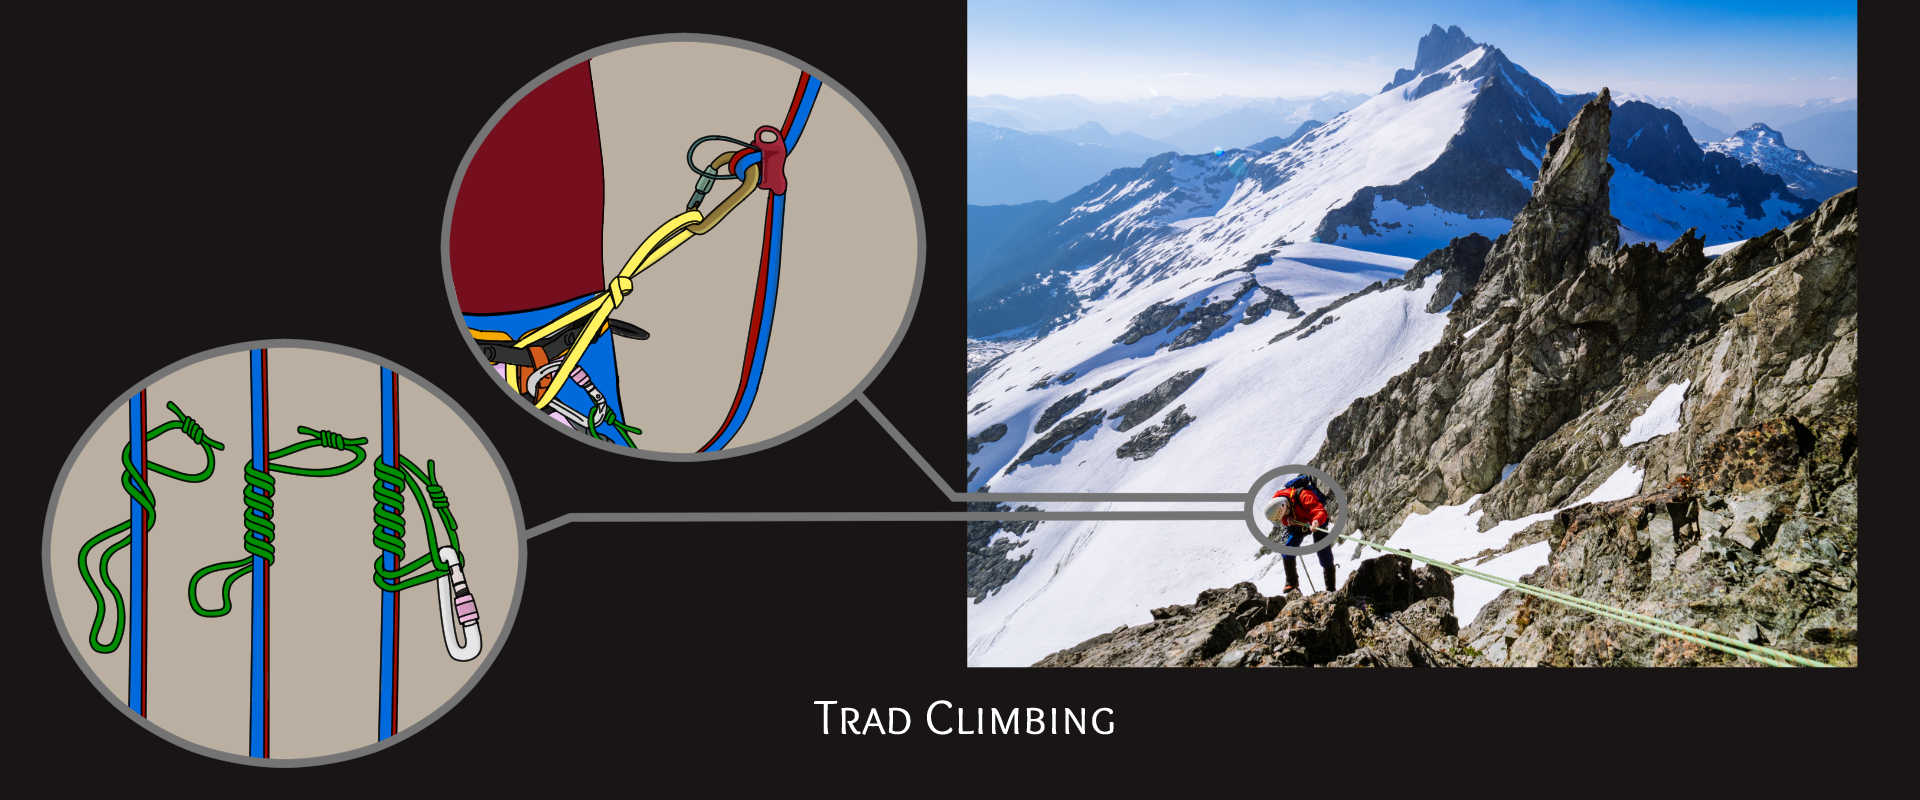 trad climbing